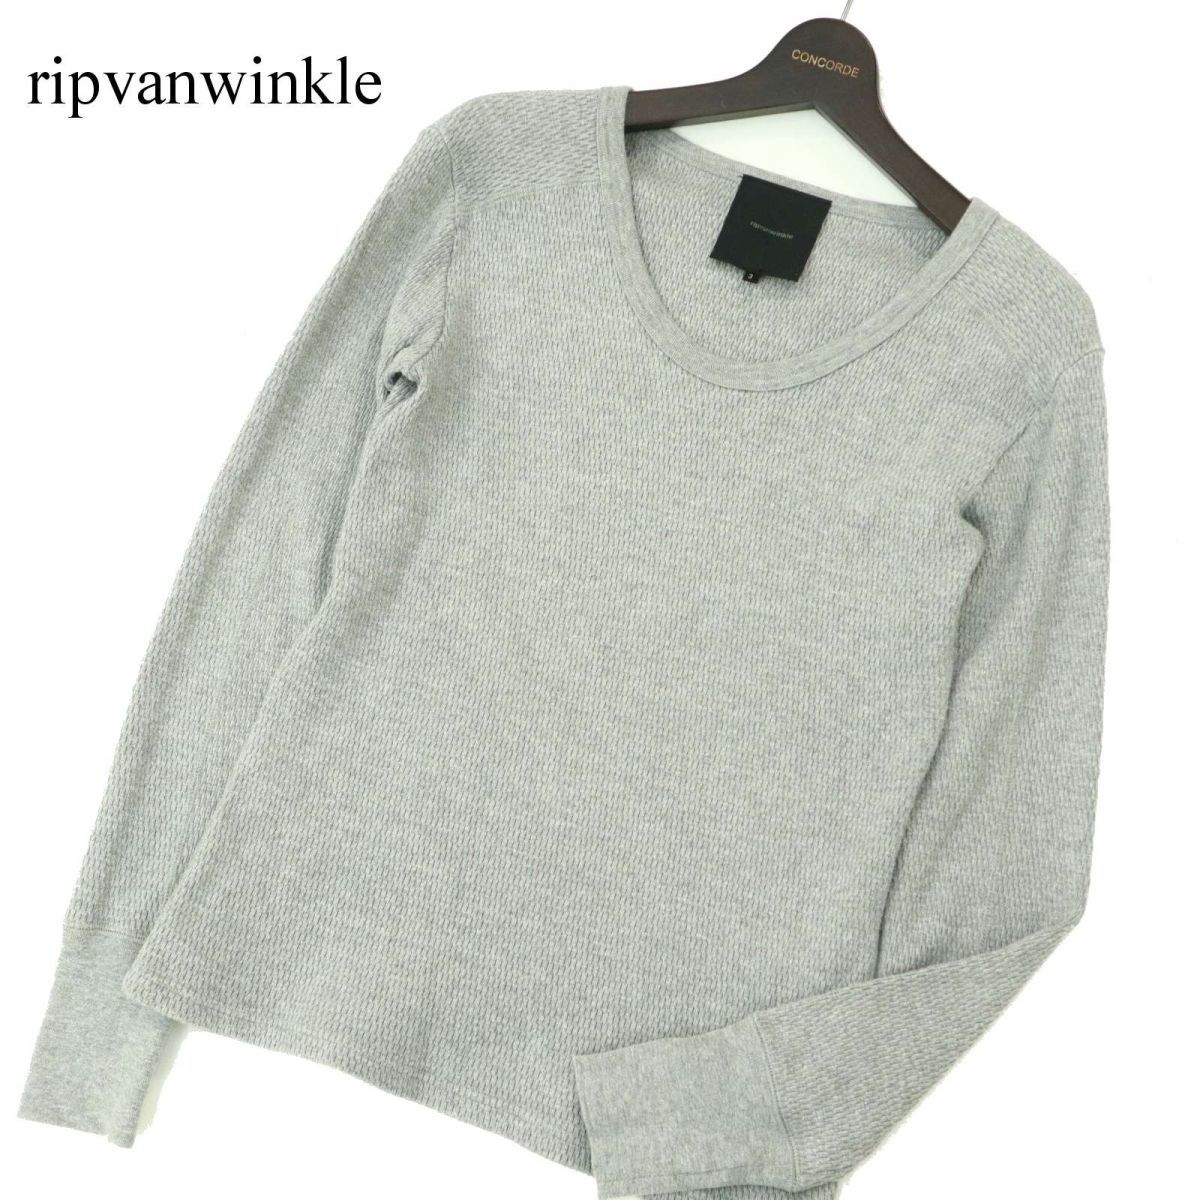 ripvanwinkle Rip Van Winkle через год вафля * длинный рукав термический cut and sewn long футболка Sz.3 мужской серый сделано в Японии A3T15174_C#L